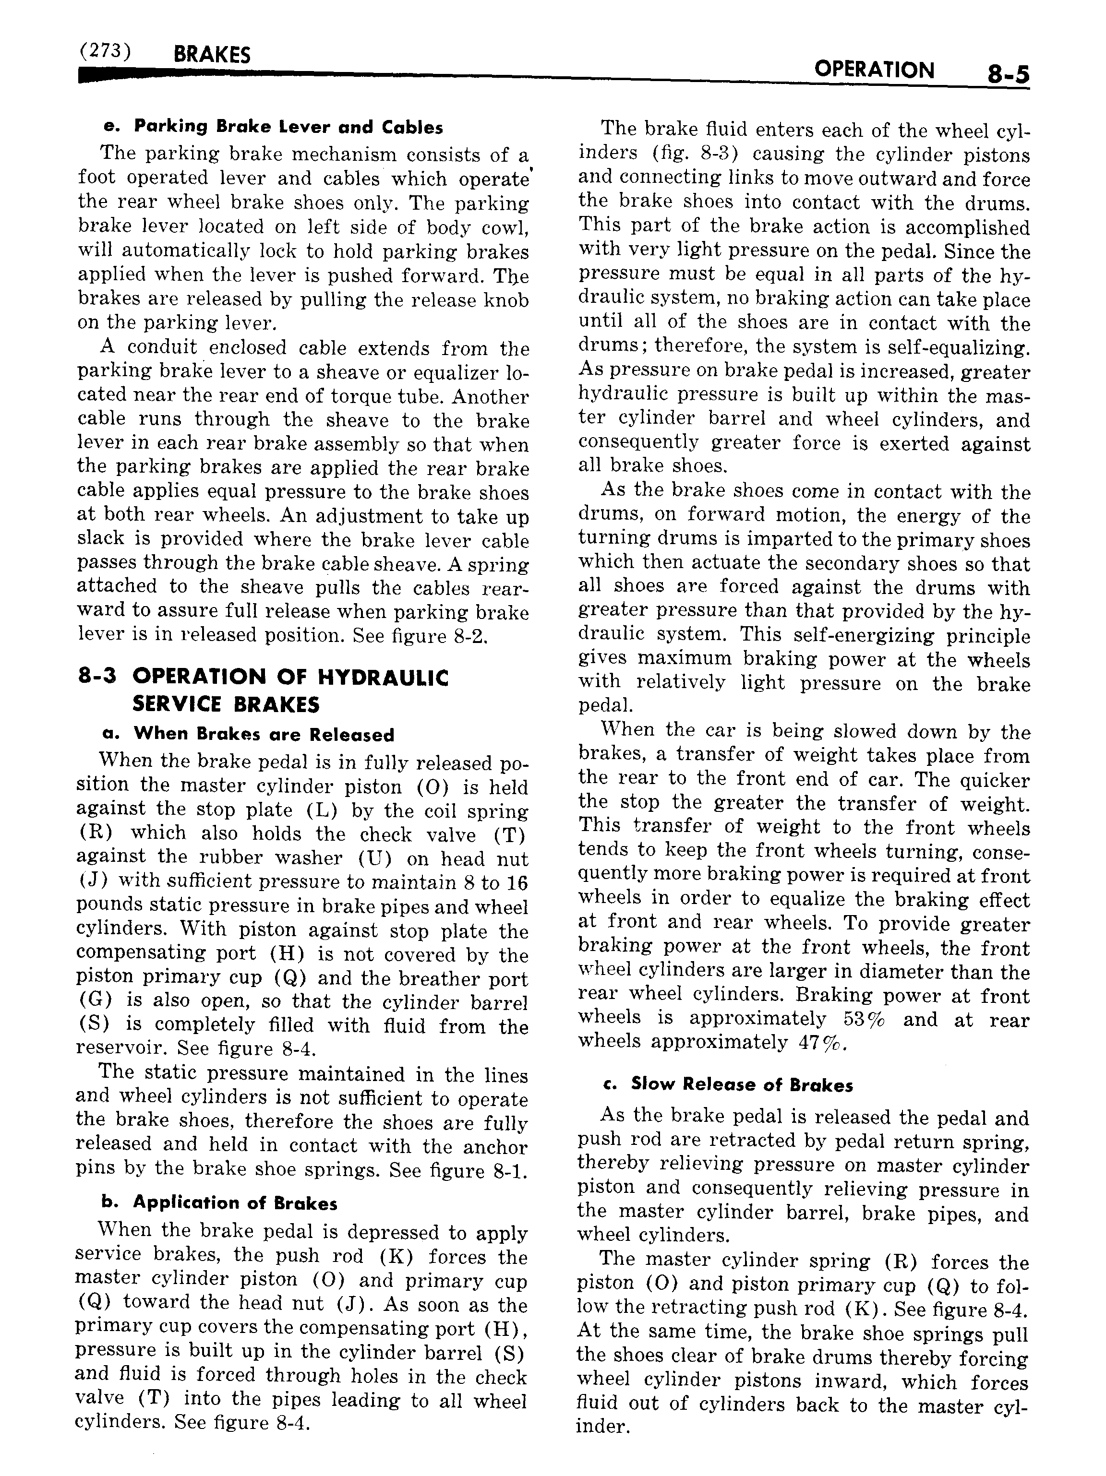 n_09 1951 Buick Shop Manual - Brakes-005-005.jpg